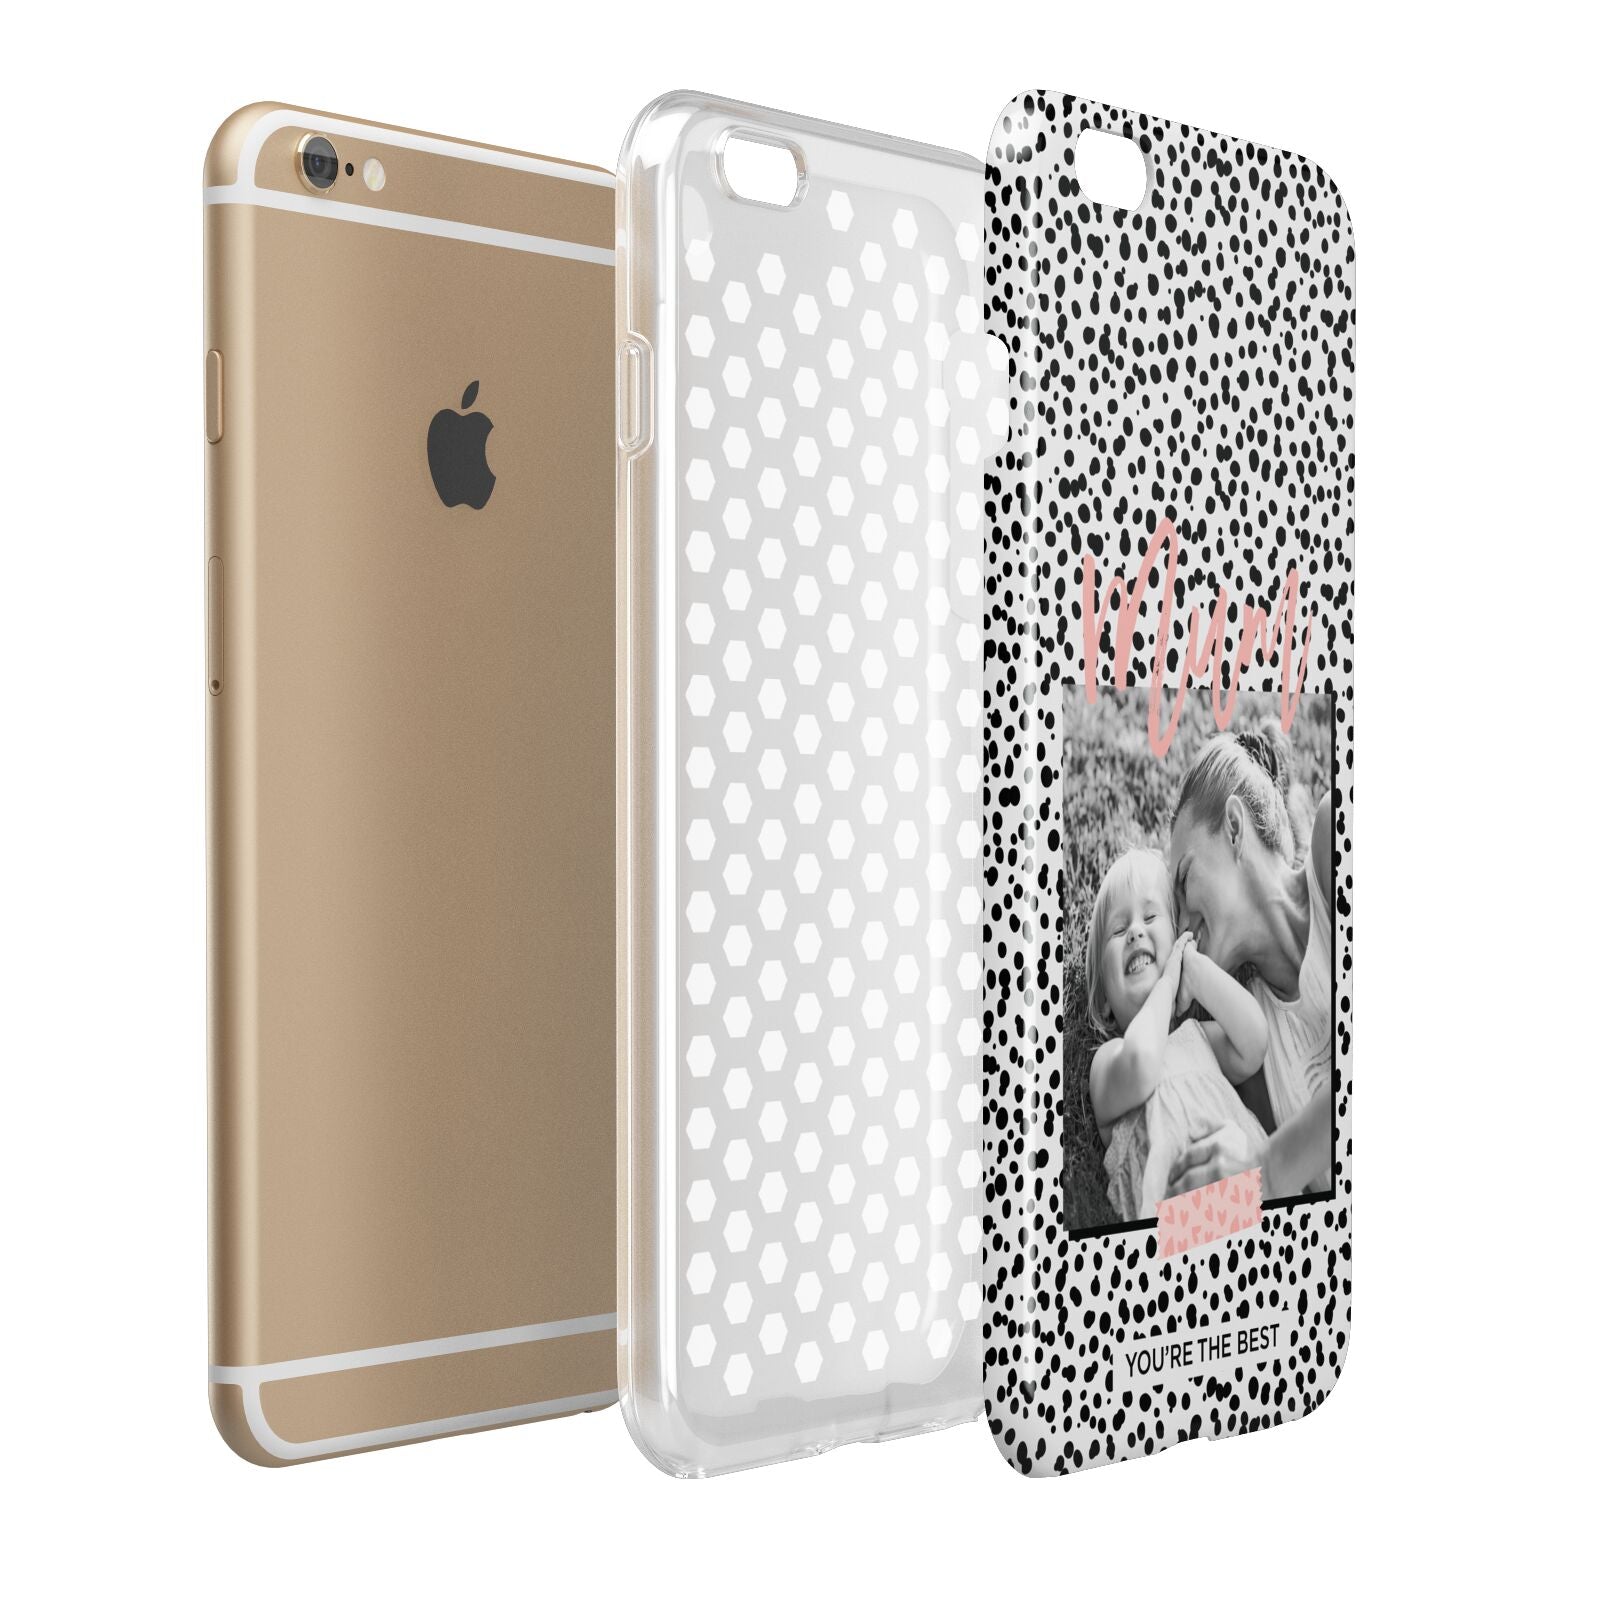 Polka Dot Mum Apple iPhone 6 Plus 3D Tough Case